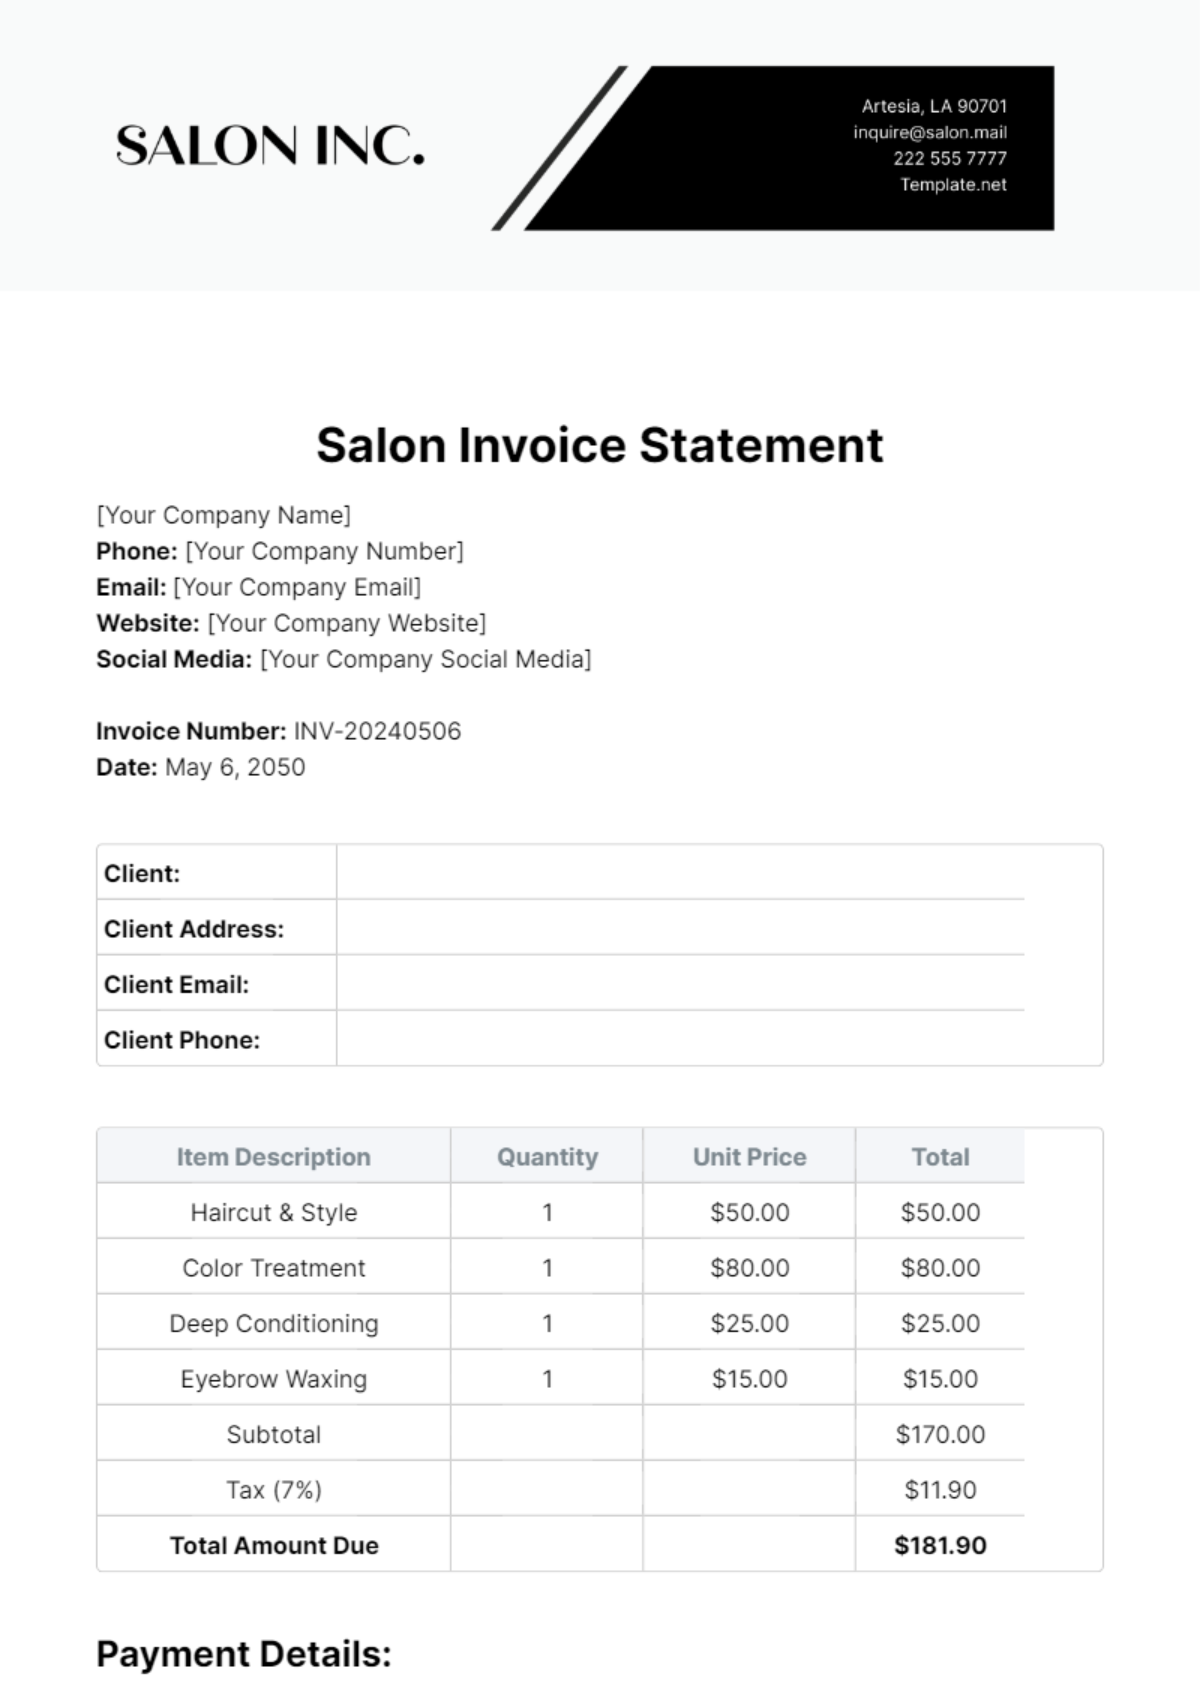 Salon Invoice Statement Template